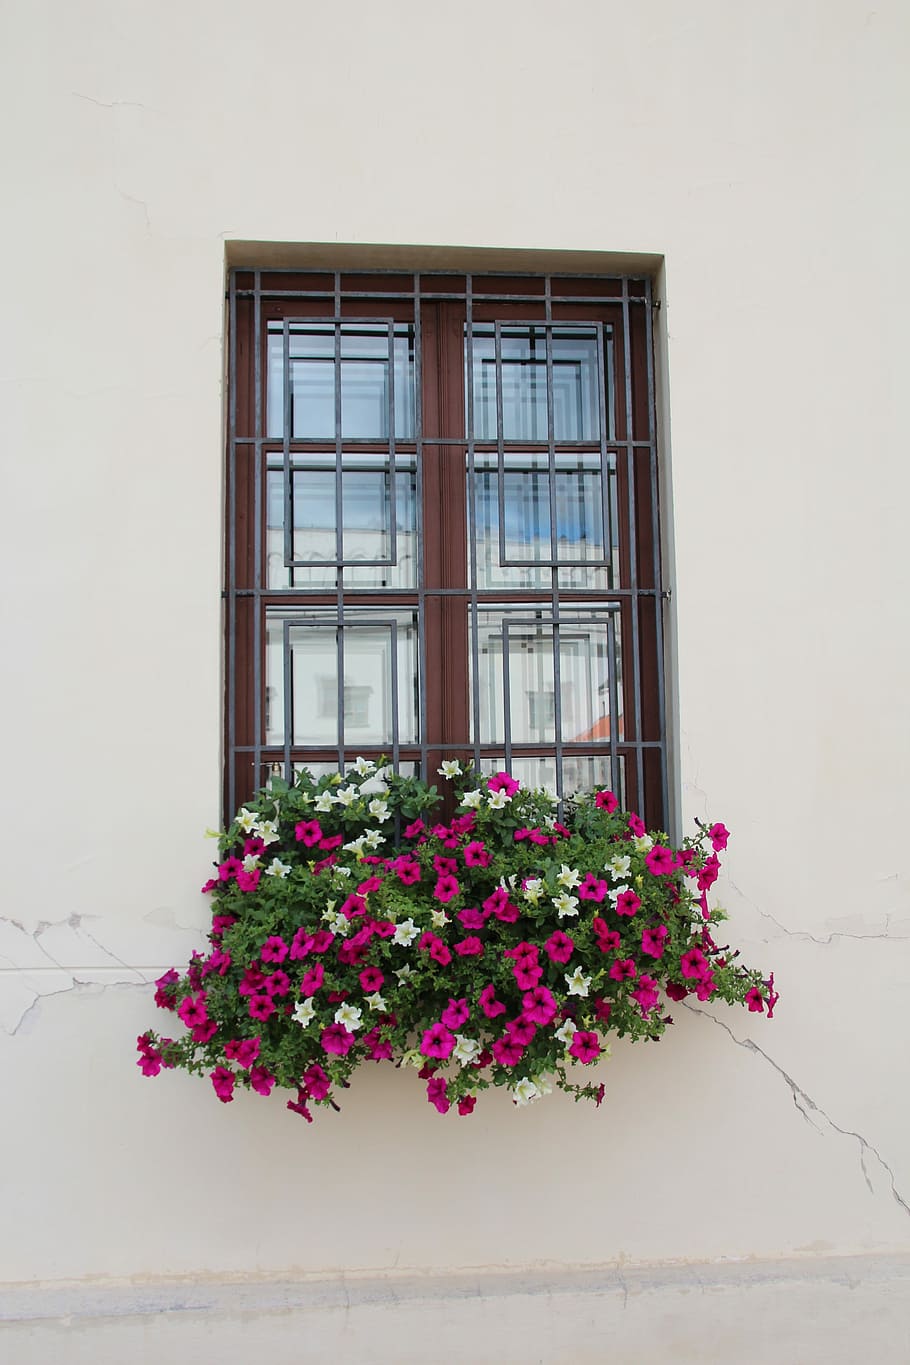 Window, Flower Box, Decoration, Flowers, flower, day, building exterior, pink color, flowering plant, plant